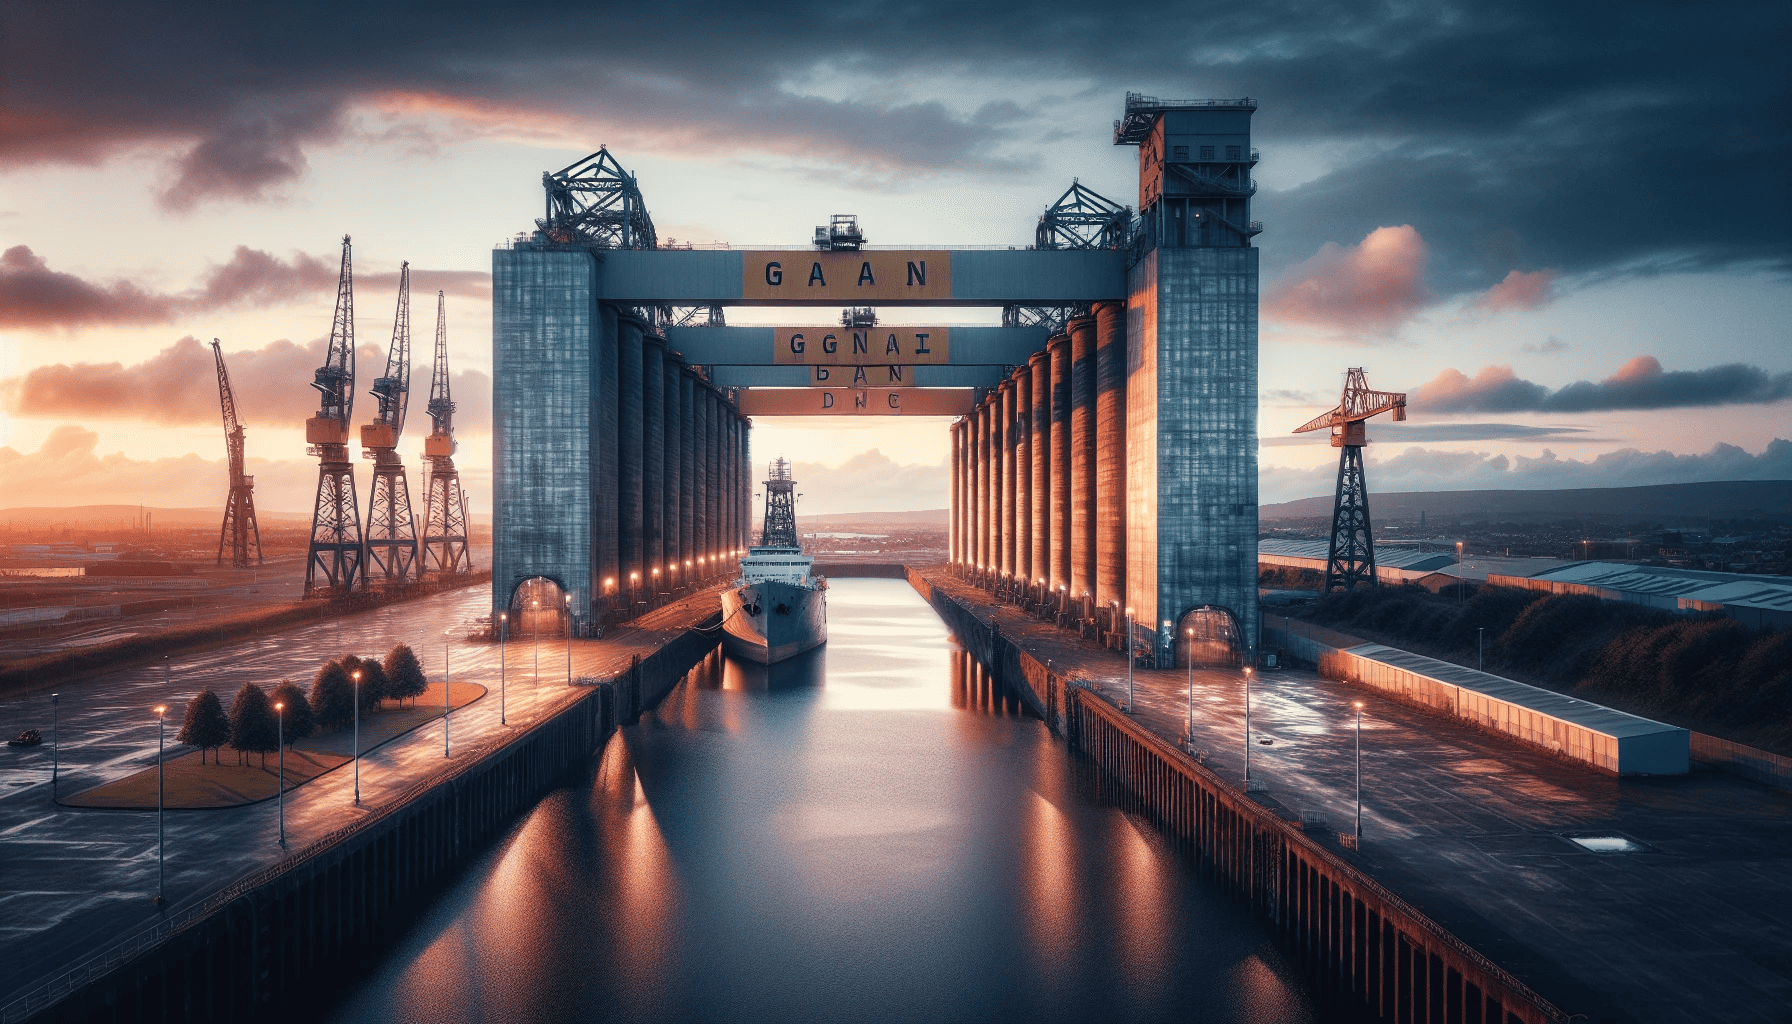 Thompson Graving Dock, an innovative engineering marvel in Belfast